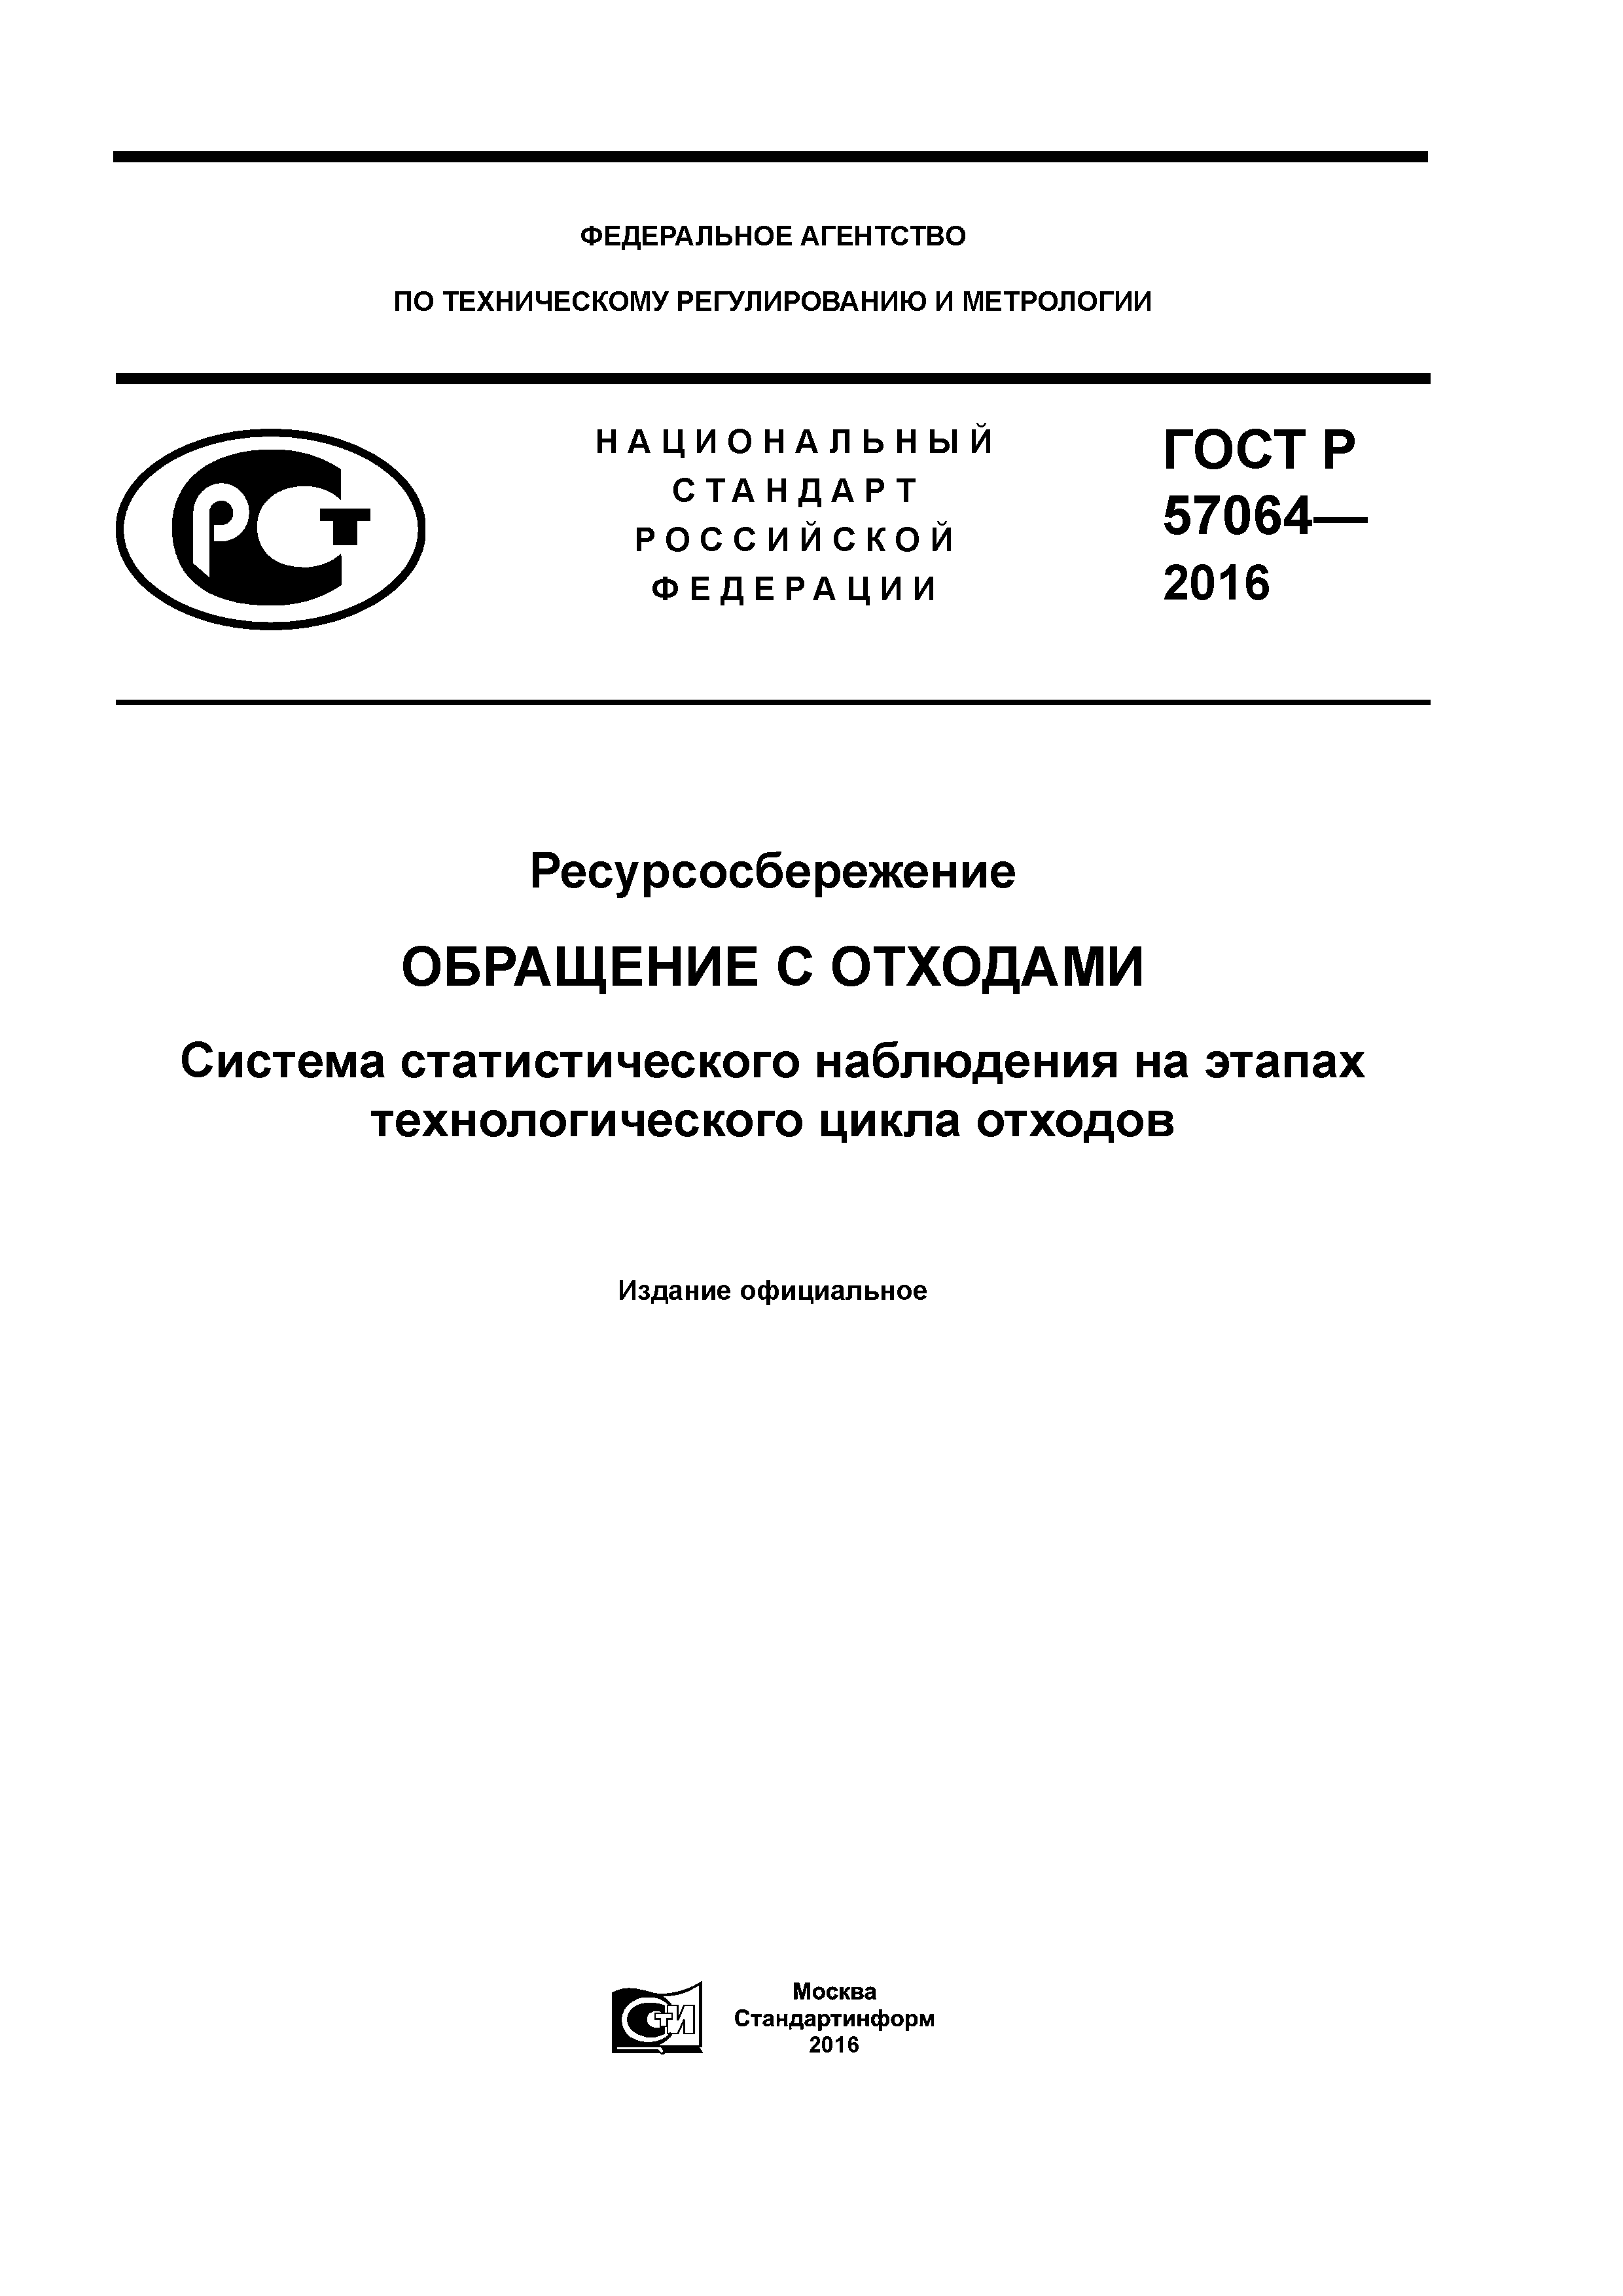 ГОСТ Р 57064-2016